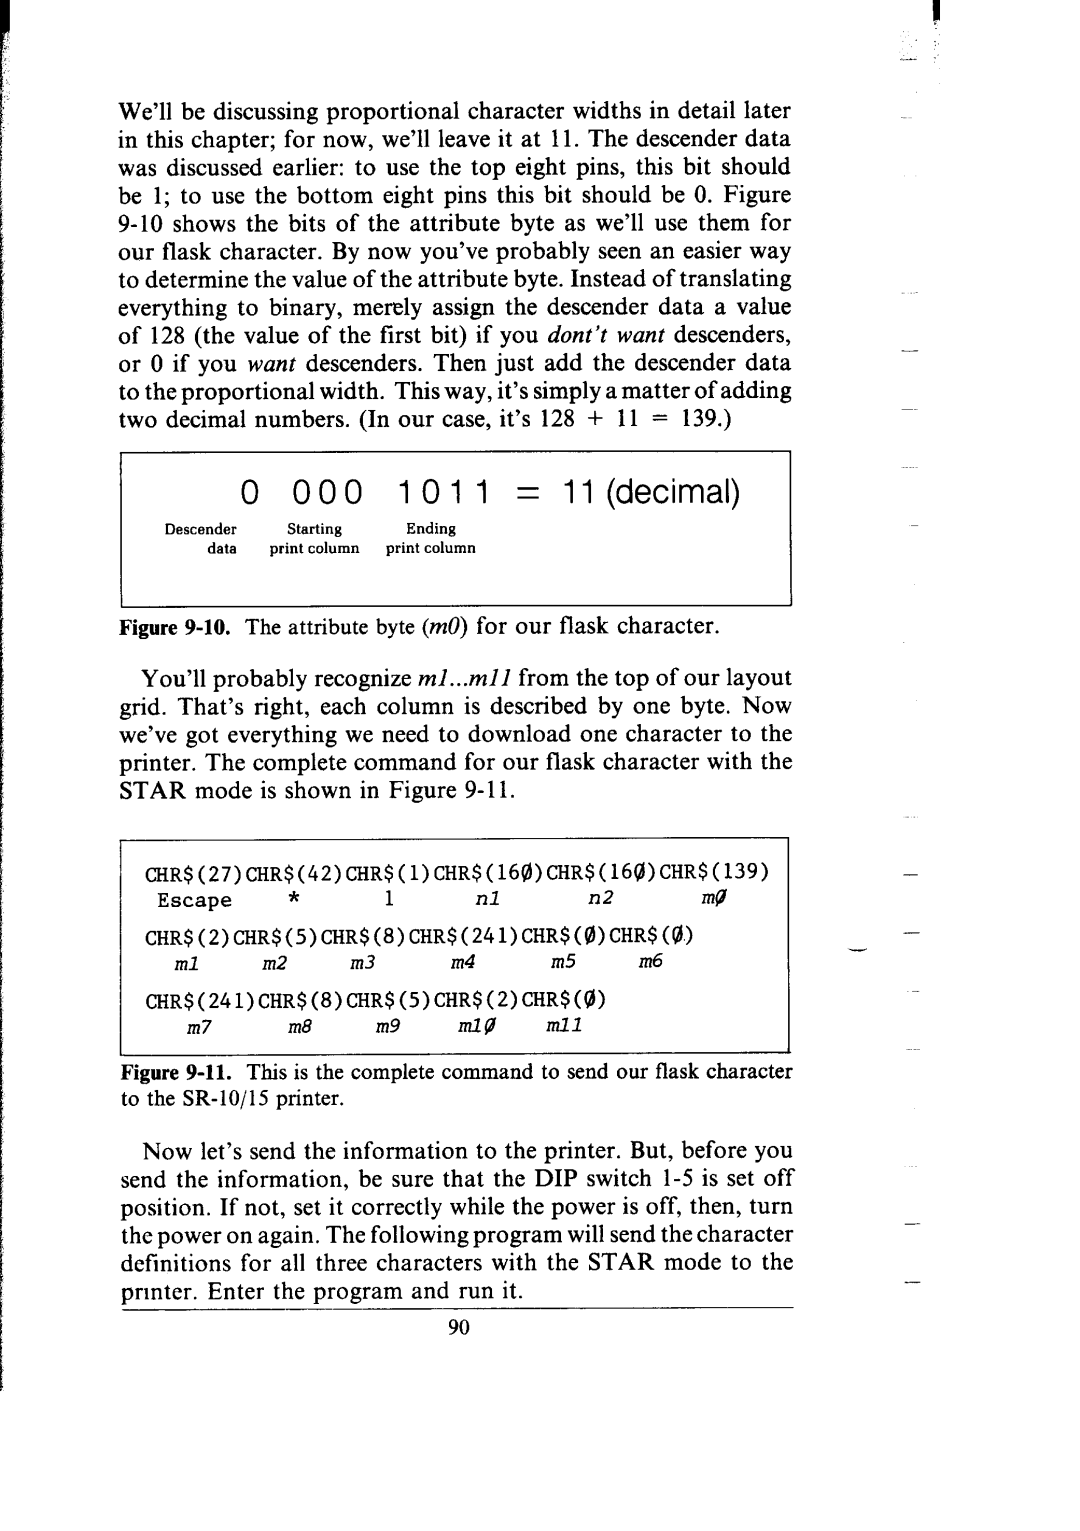 Star Micronics SR-10/I5 user manual 0 000 1011 = Ildecimal 